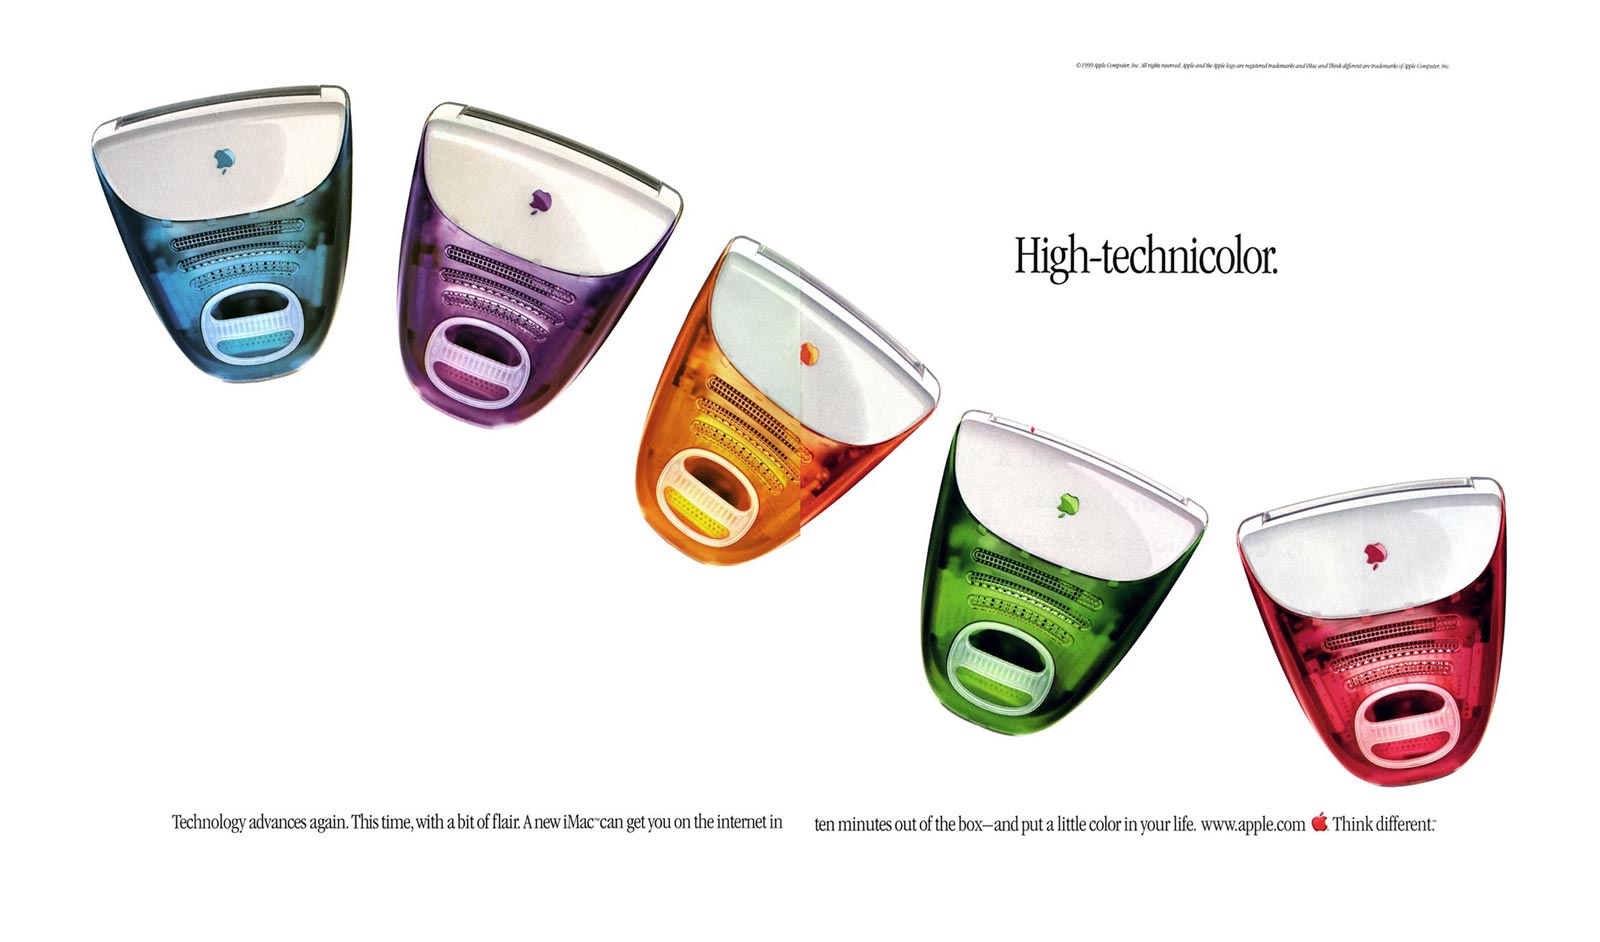 iMac G3 Magazine Ad